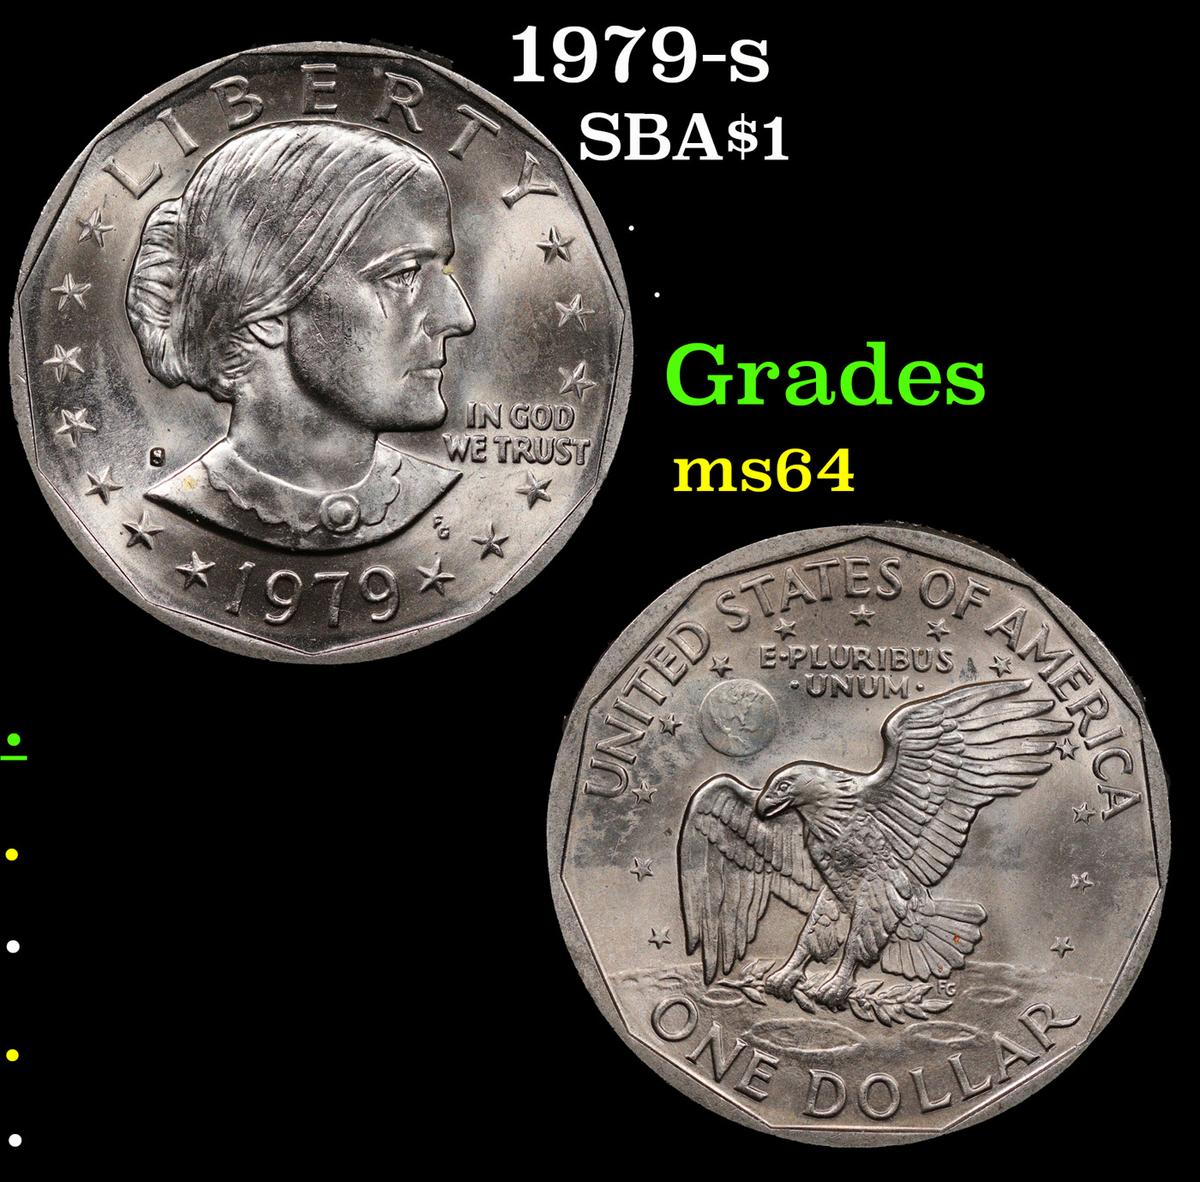 1979-s Susan B. Anthony Dollar $1 Grades Choice Unc